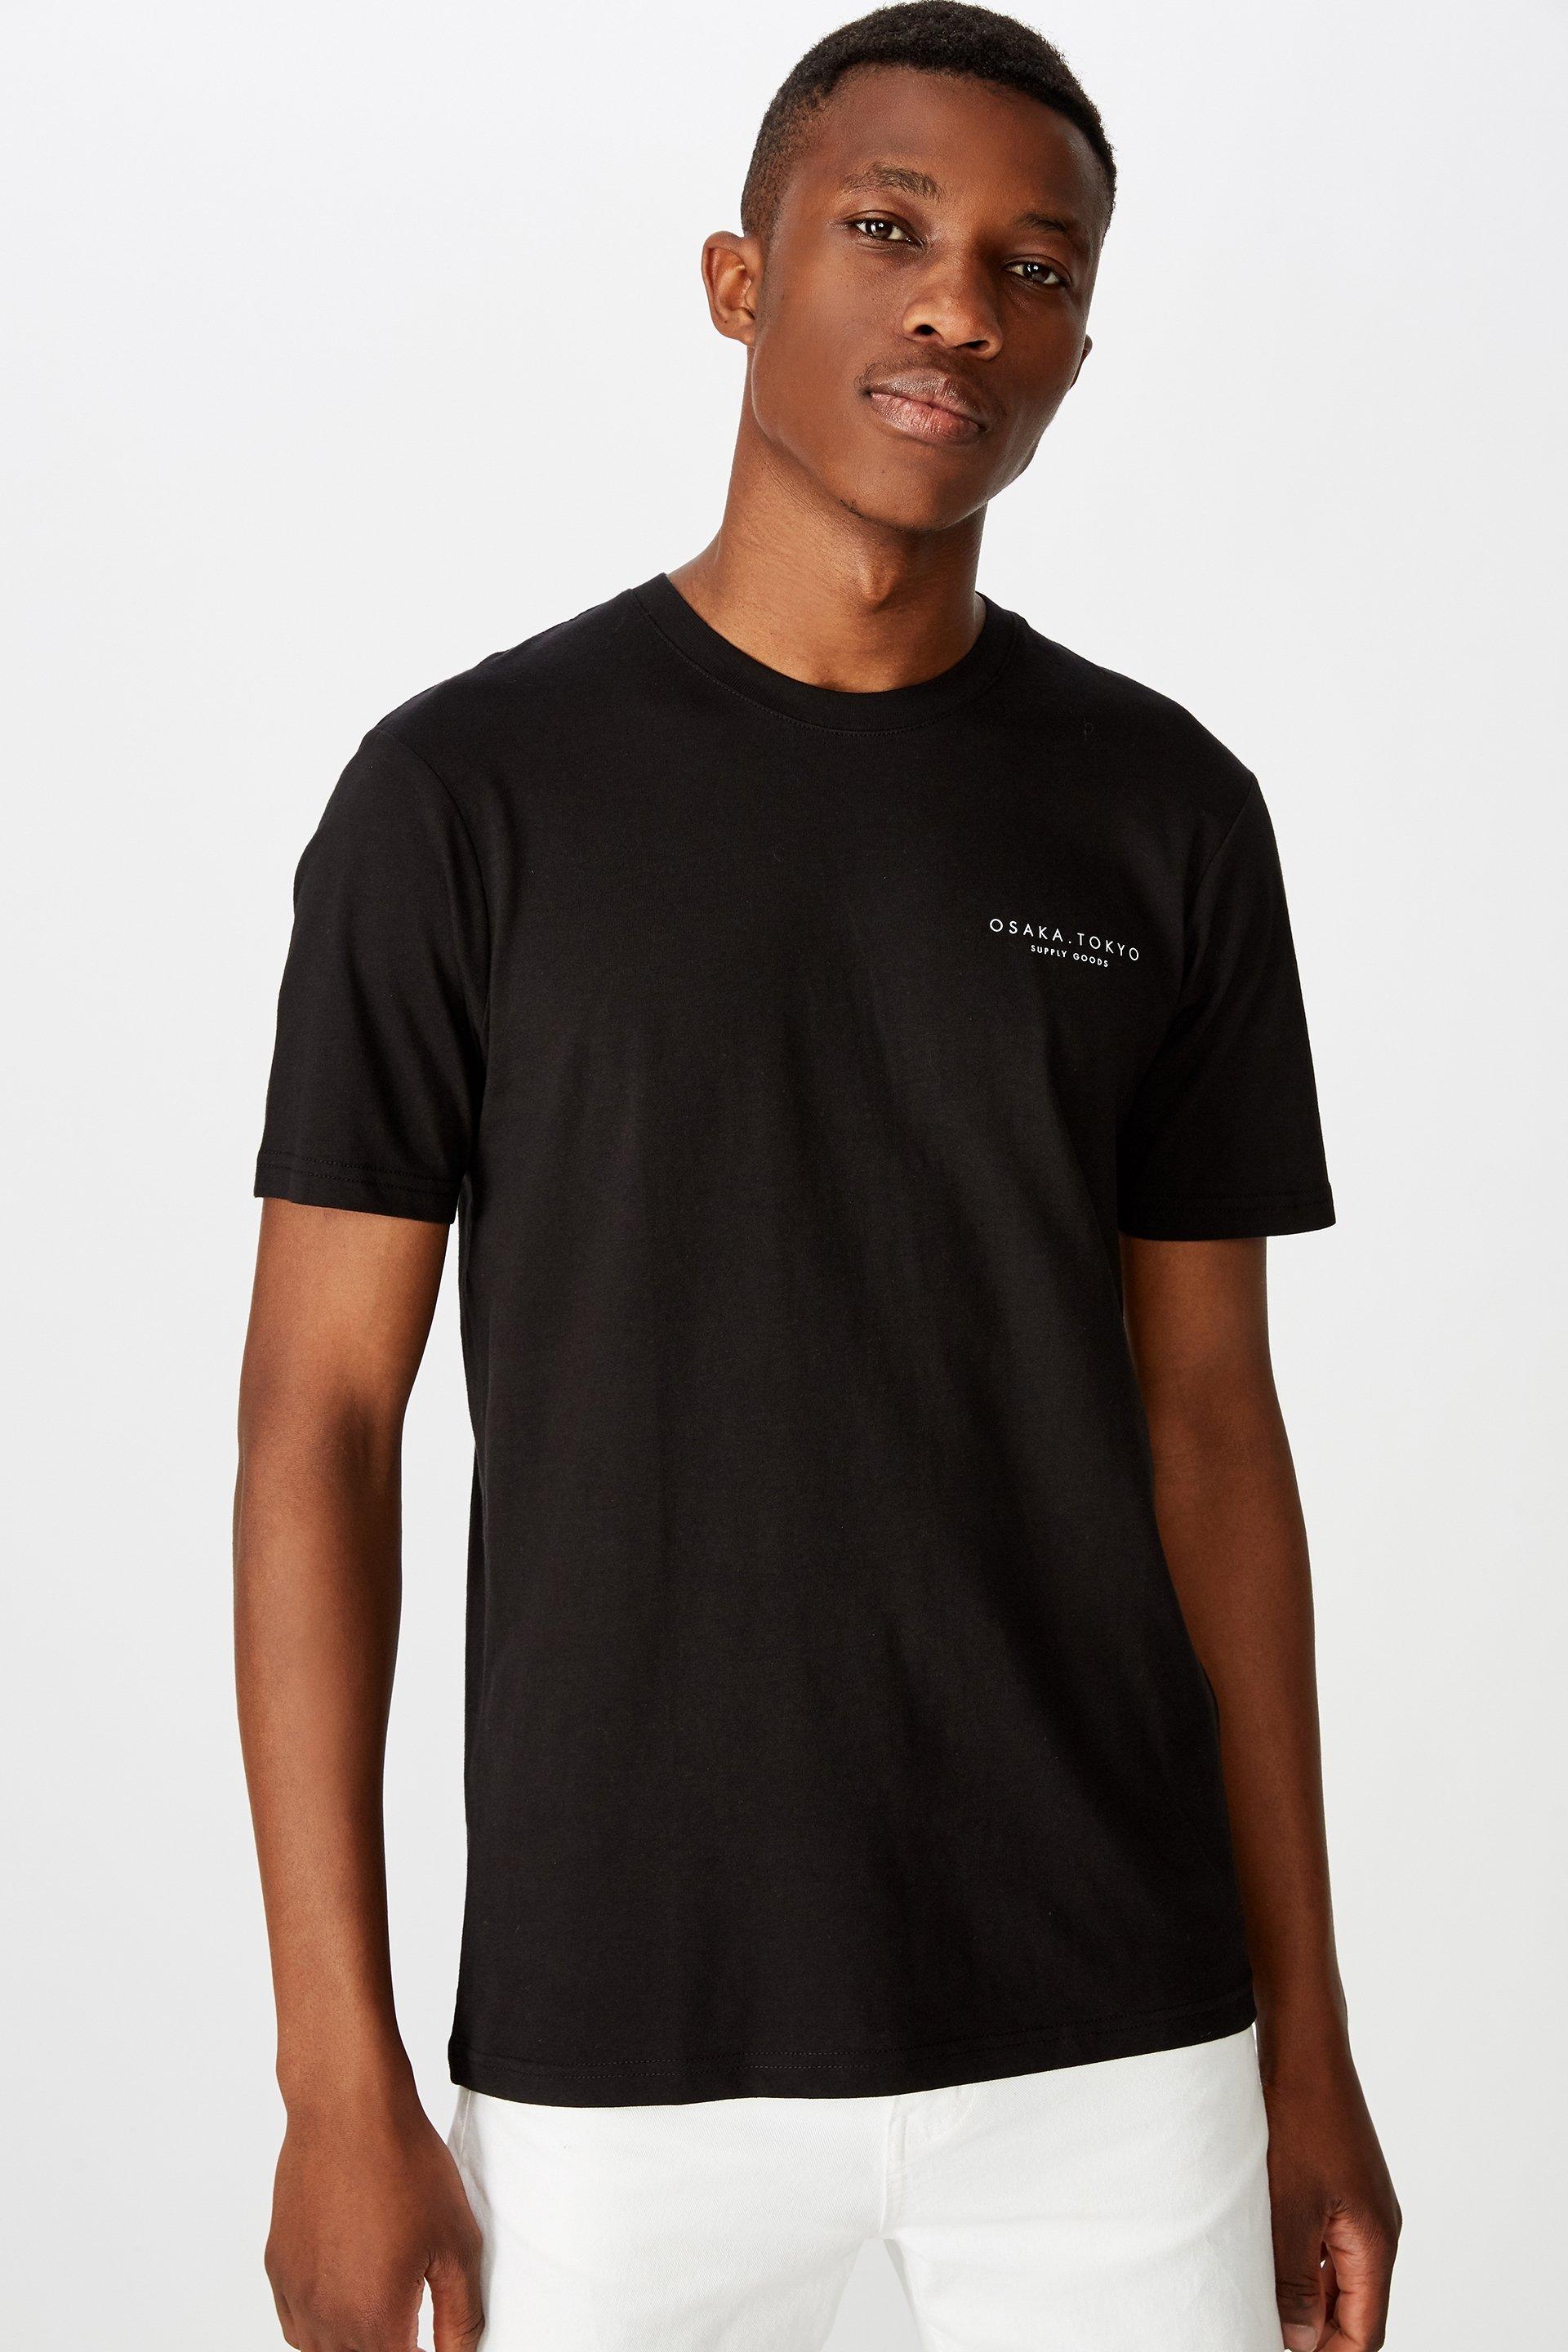 Tbar text t-shirt - black Cotton On T-Shirts & Vests | Superbalist.com